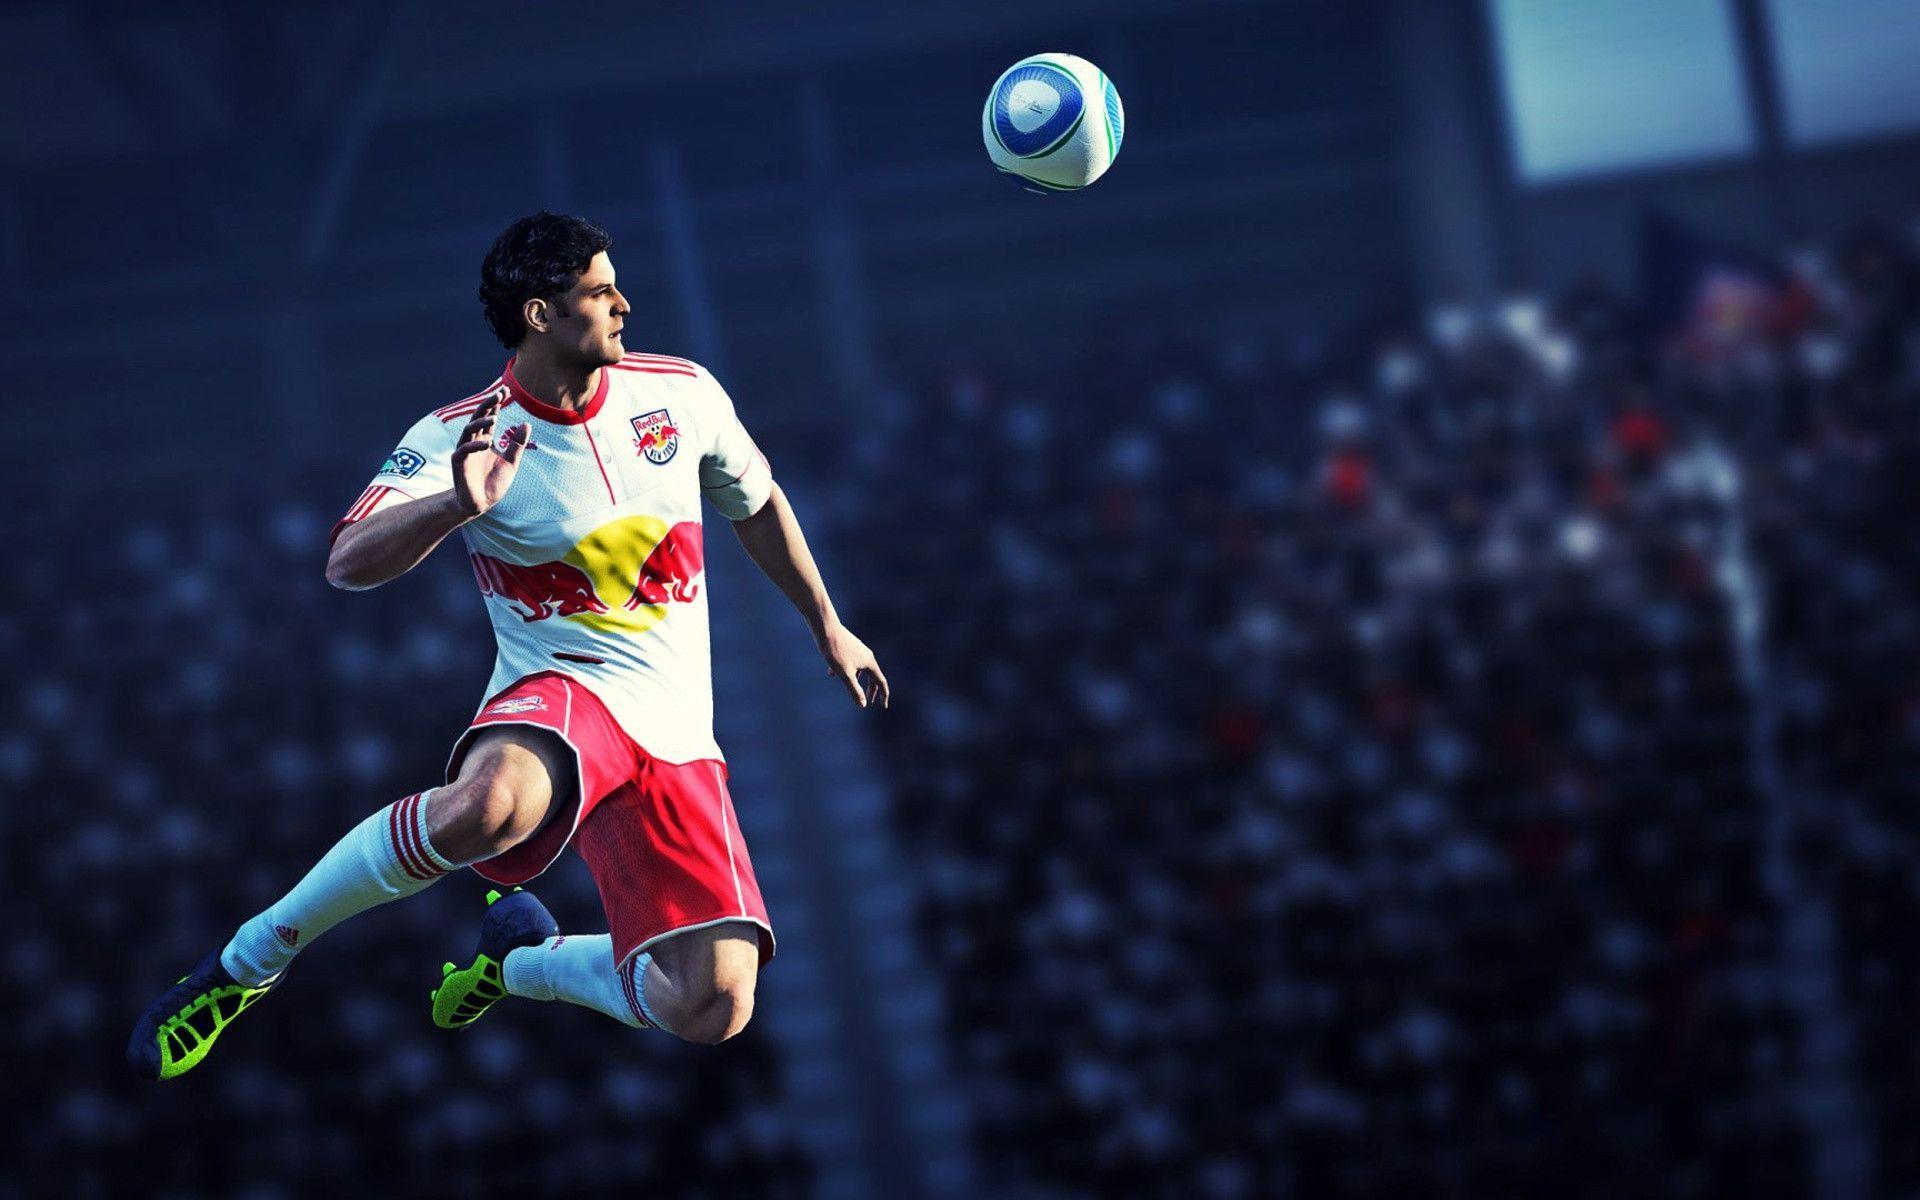 Amazing FIFA 18 Game Photo. Beautiful image HD Picture